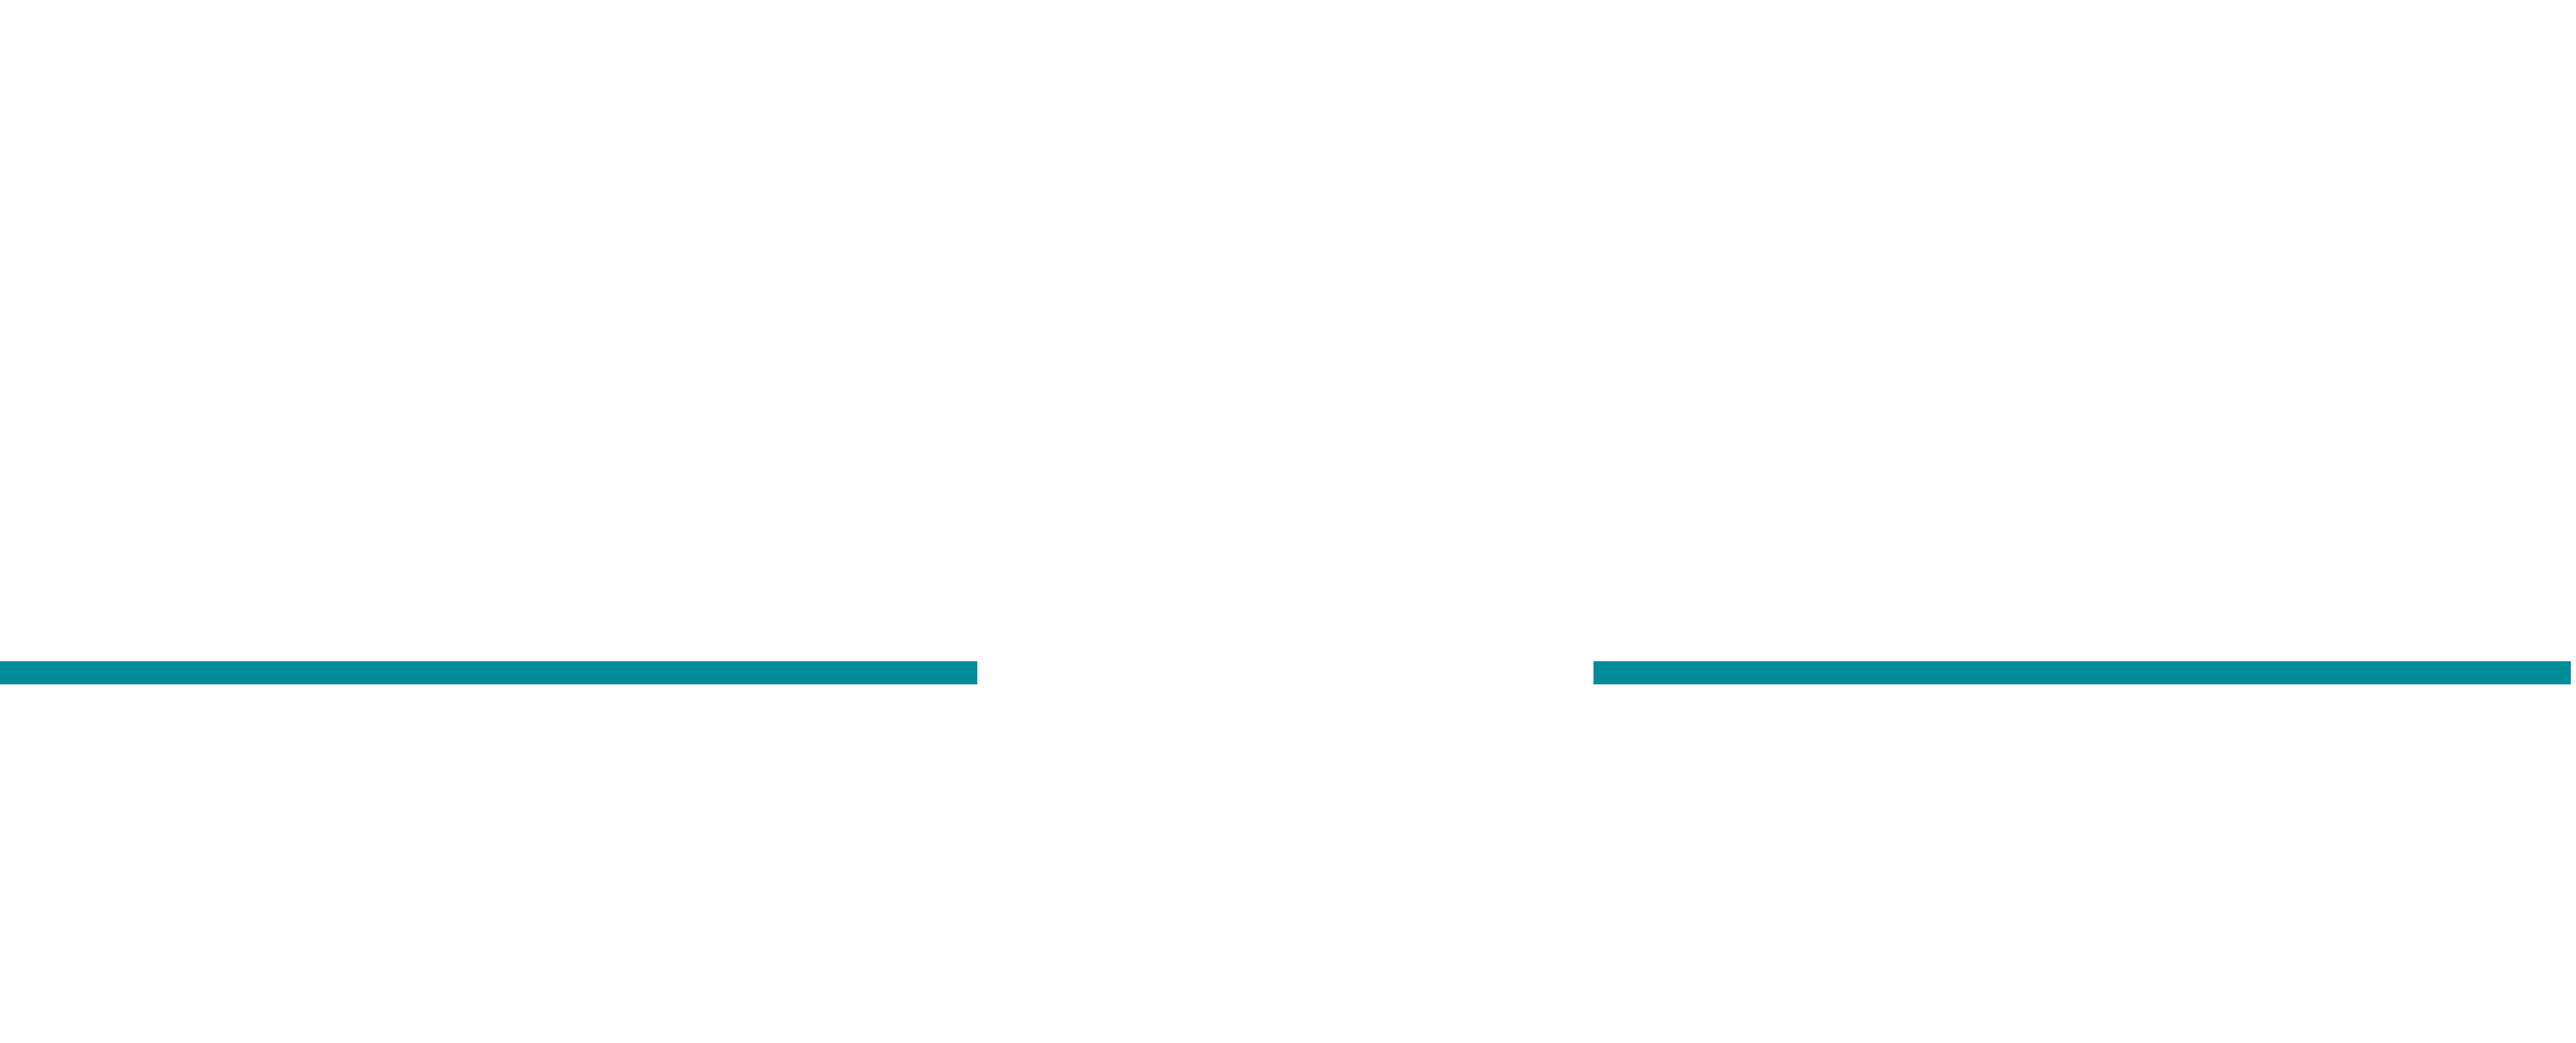 Sexual-Assault-Awareness-Month-Logo-for-Web-2.png